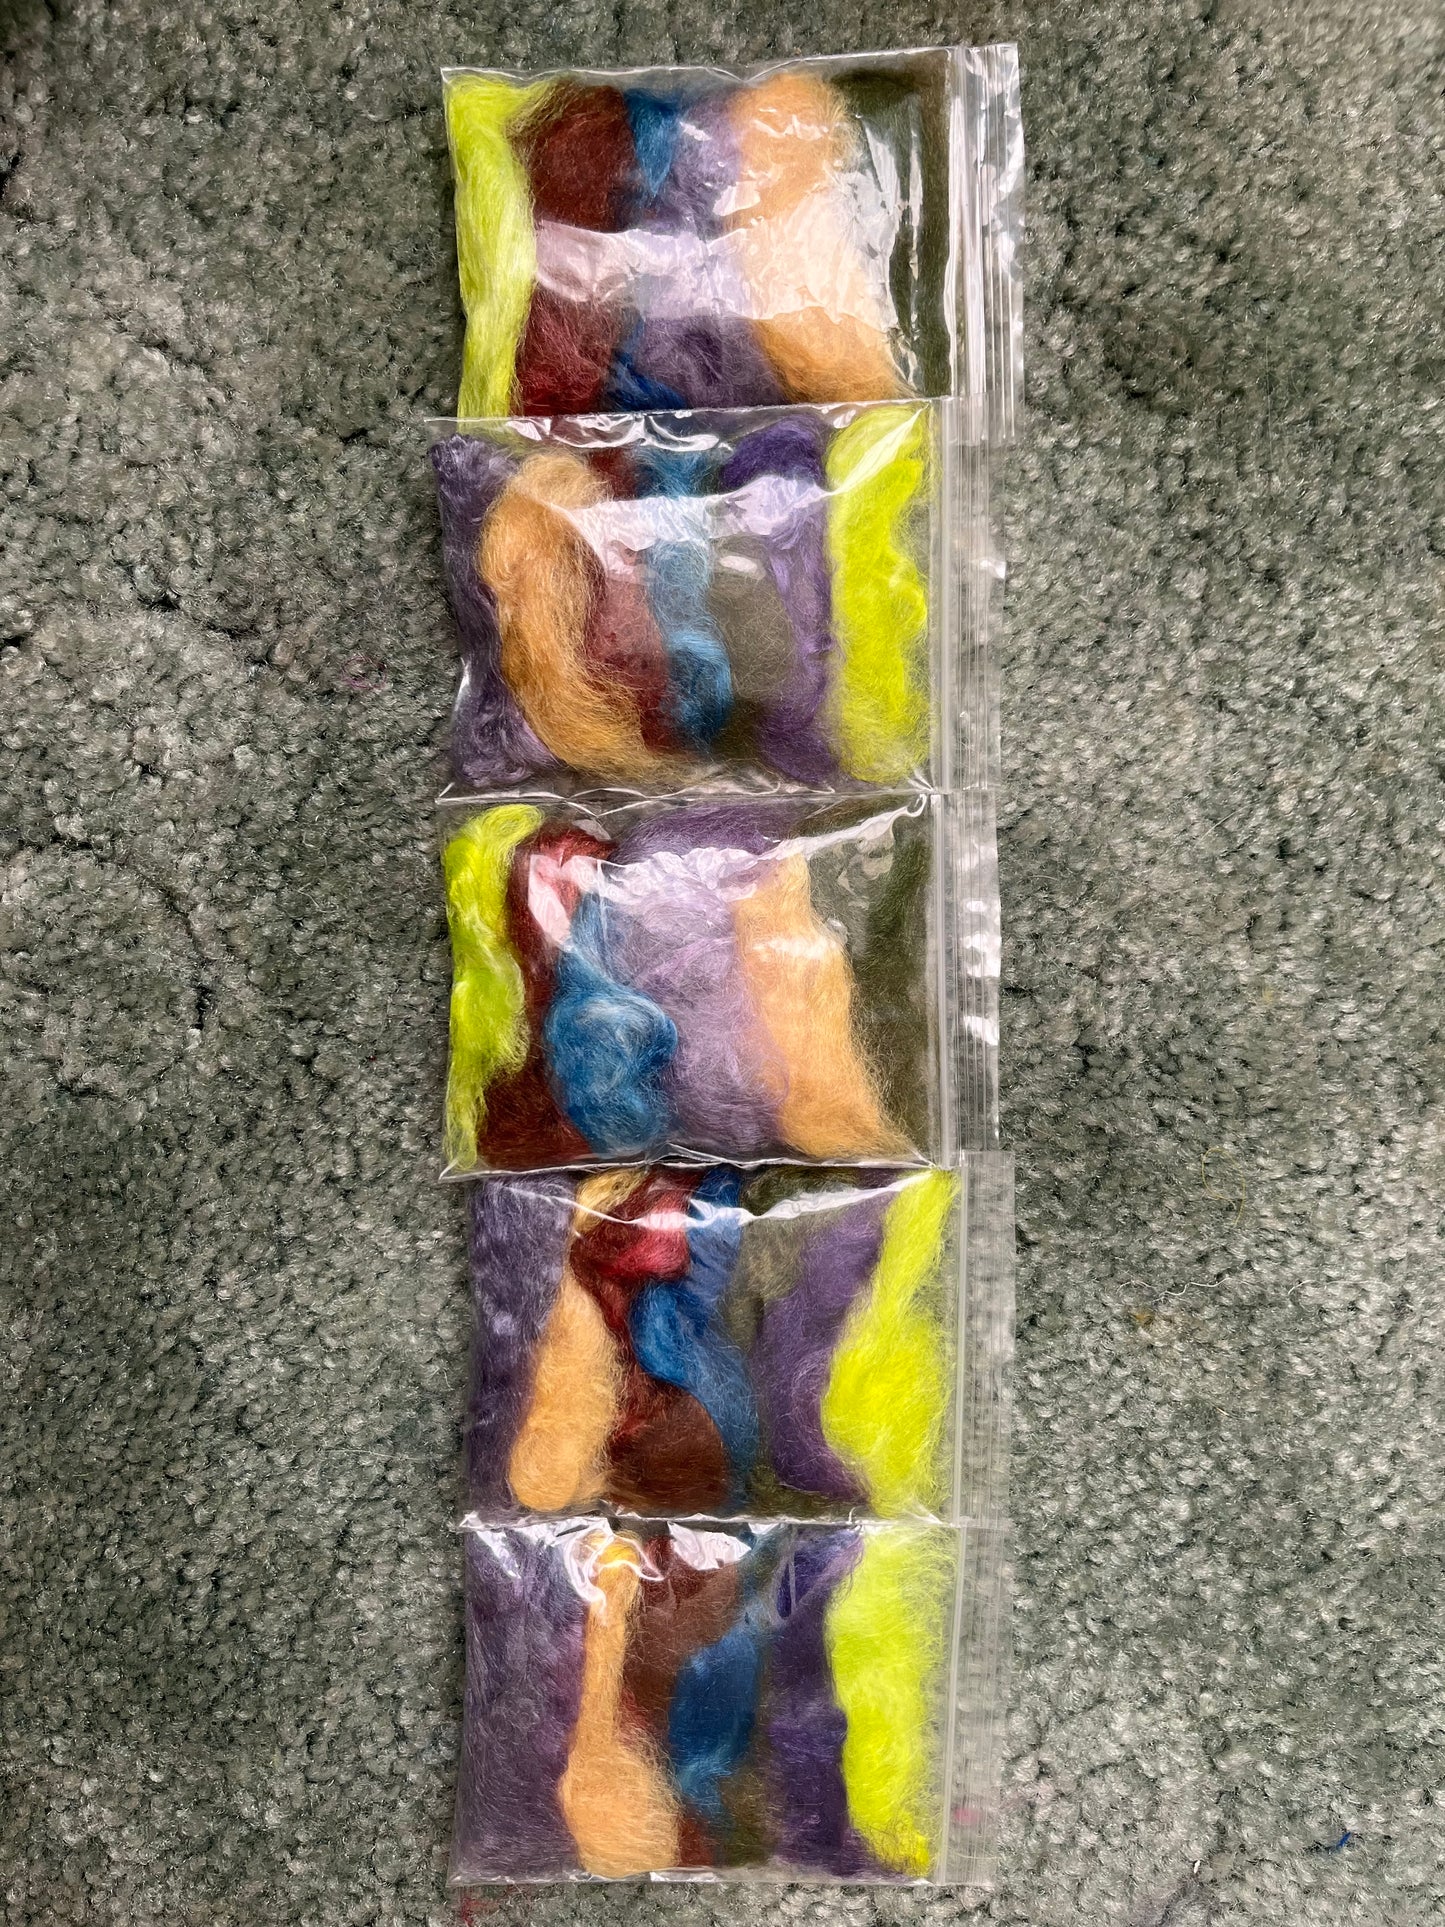 Hand dyed tussah silk💫sampler pack 5g